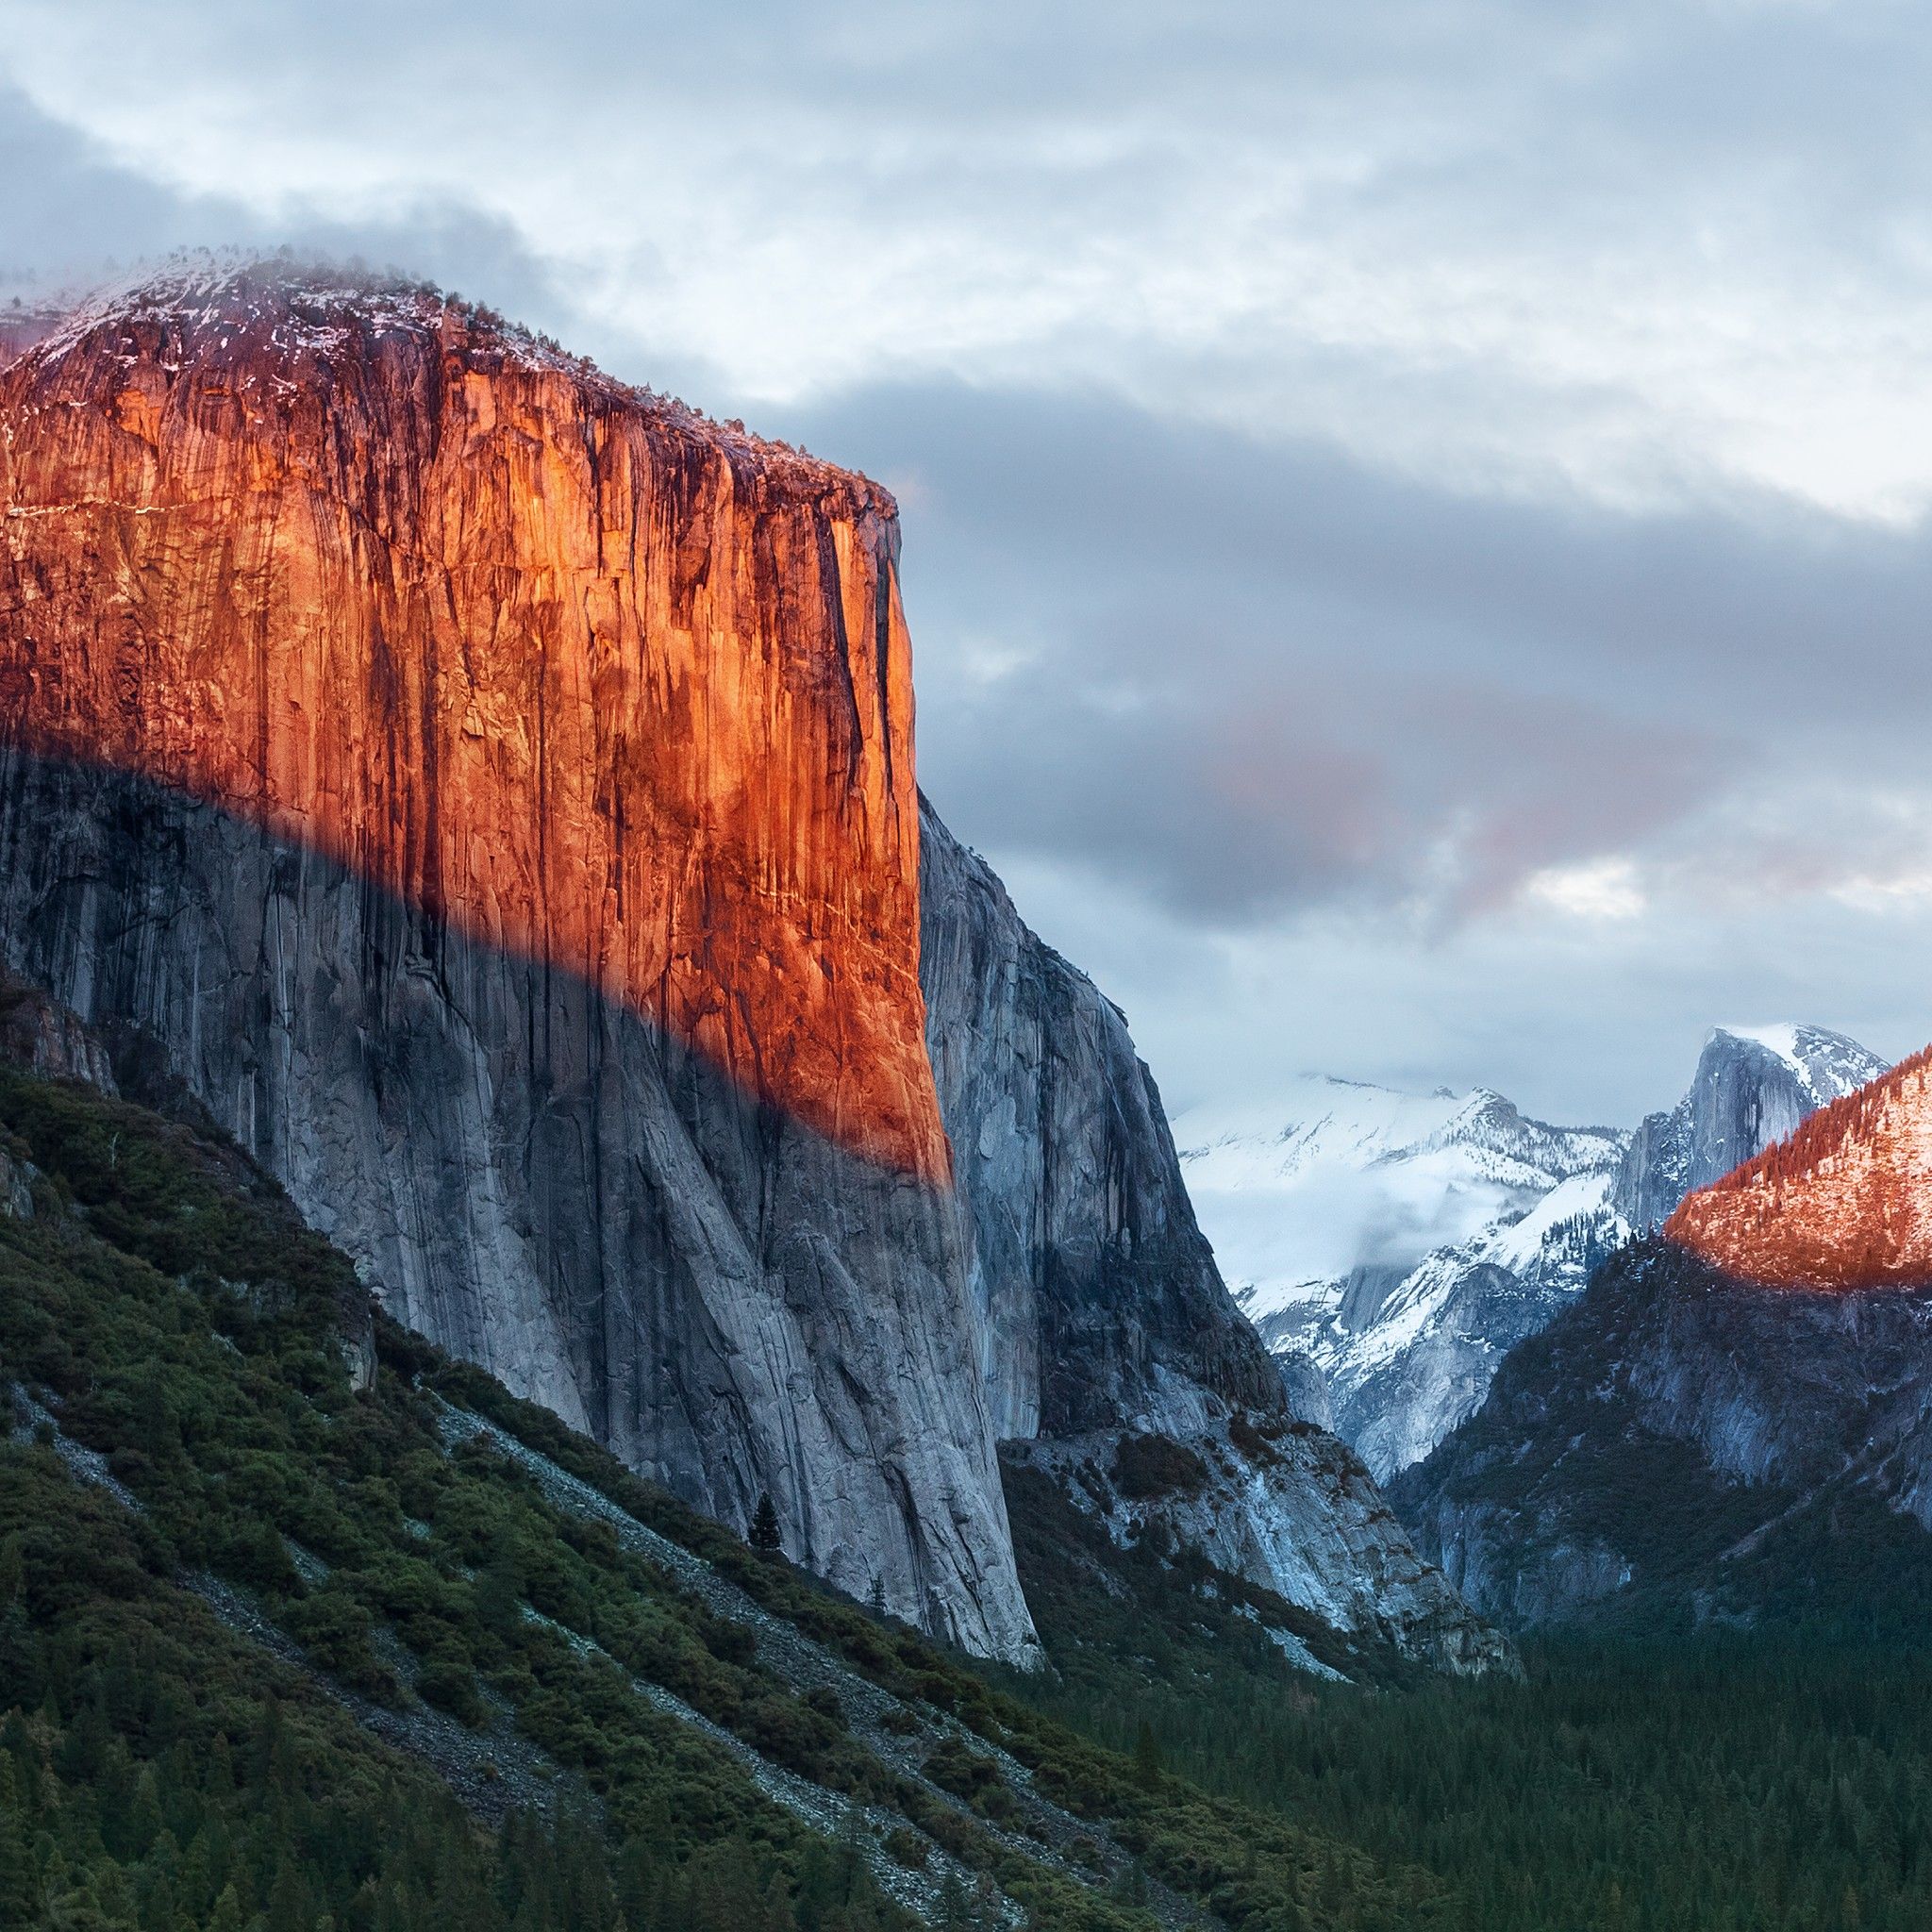 El Capitan 4K Wallpaper, Yosemite National Park, Mountains, OS X, Stock, 5K, Nature